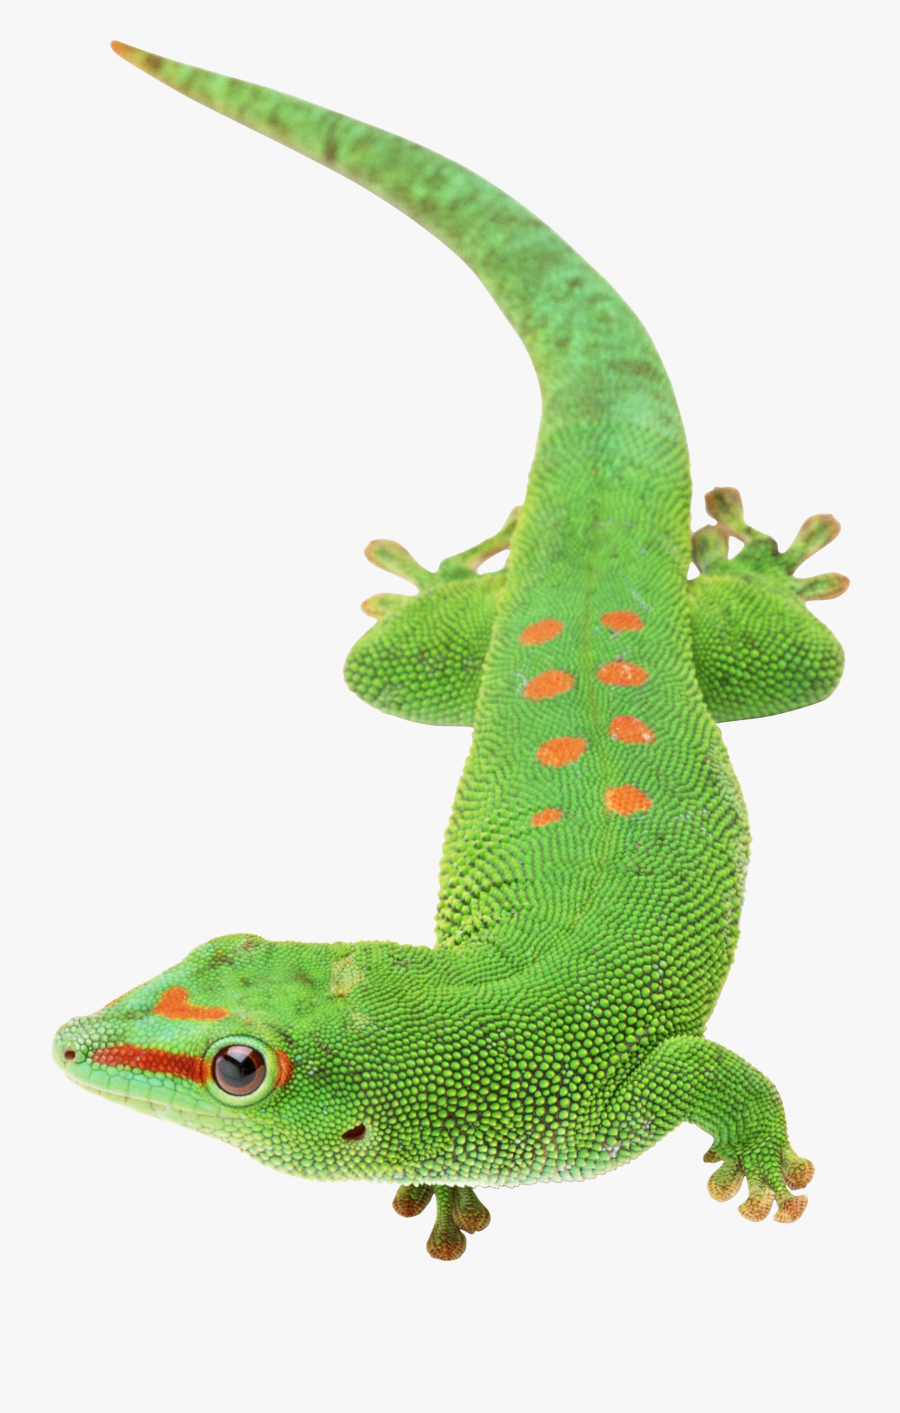 Lizard Png Images Free Download - Gecko Transparent Background, Transparent Clipart